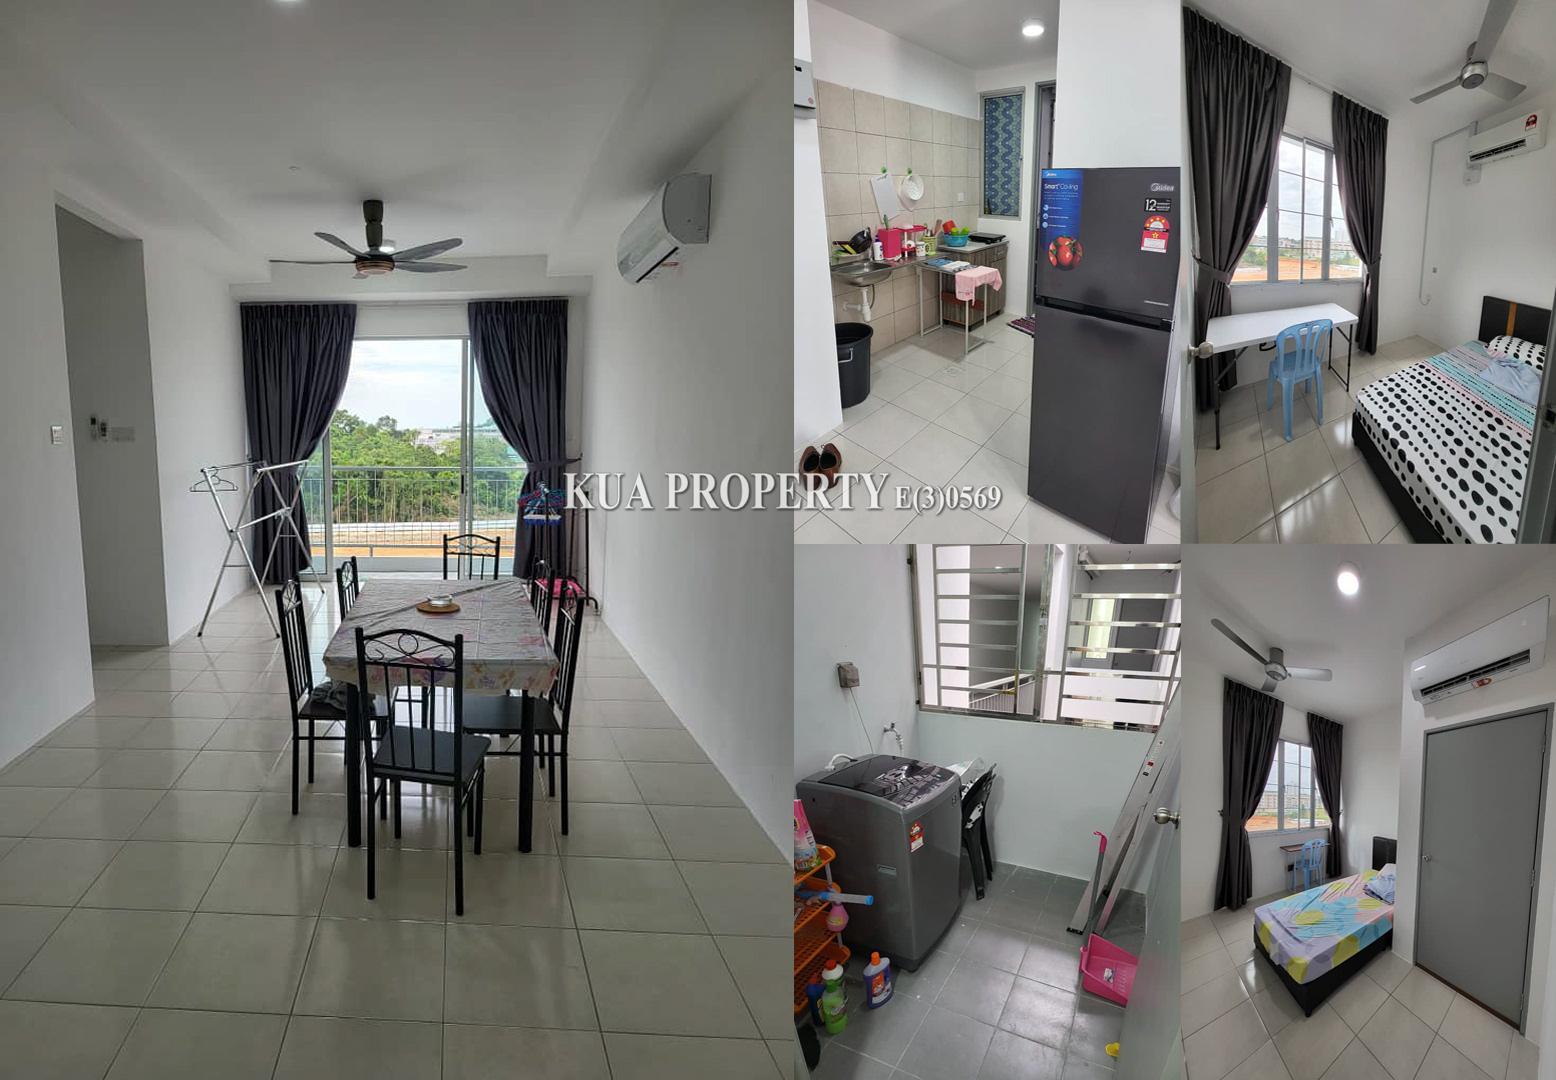 Level 6 IKE Village Apartment For Rent! at Kota Samarahan